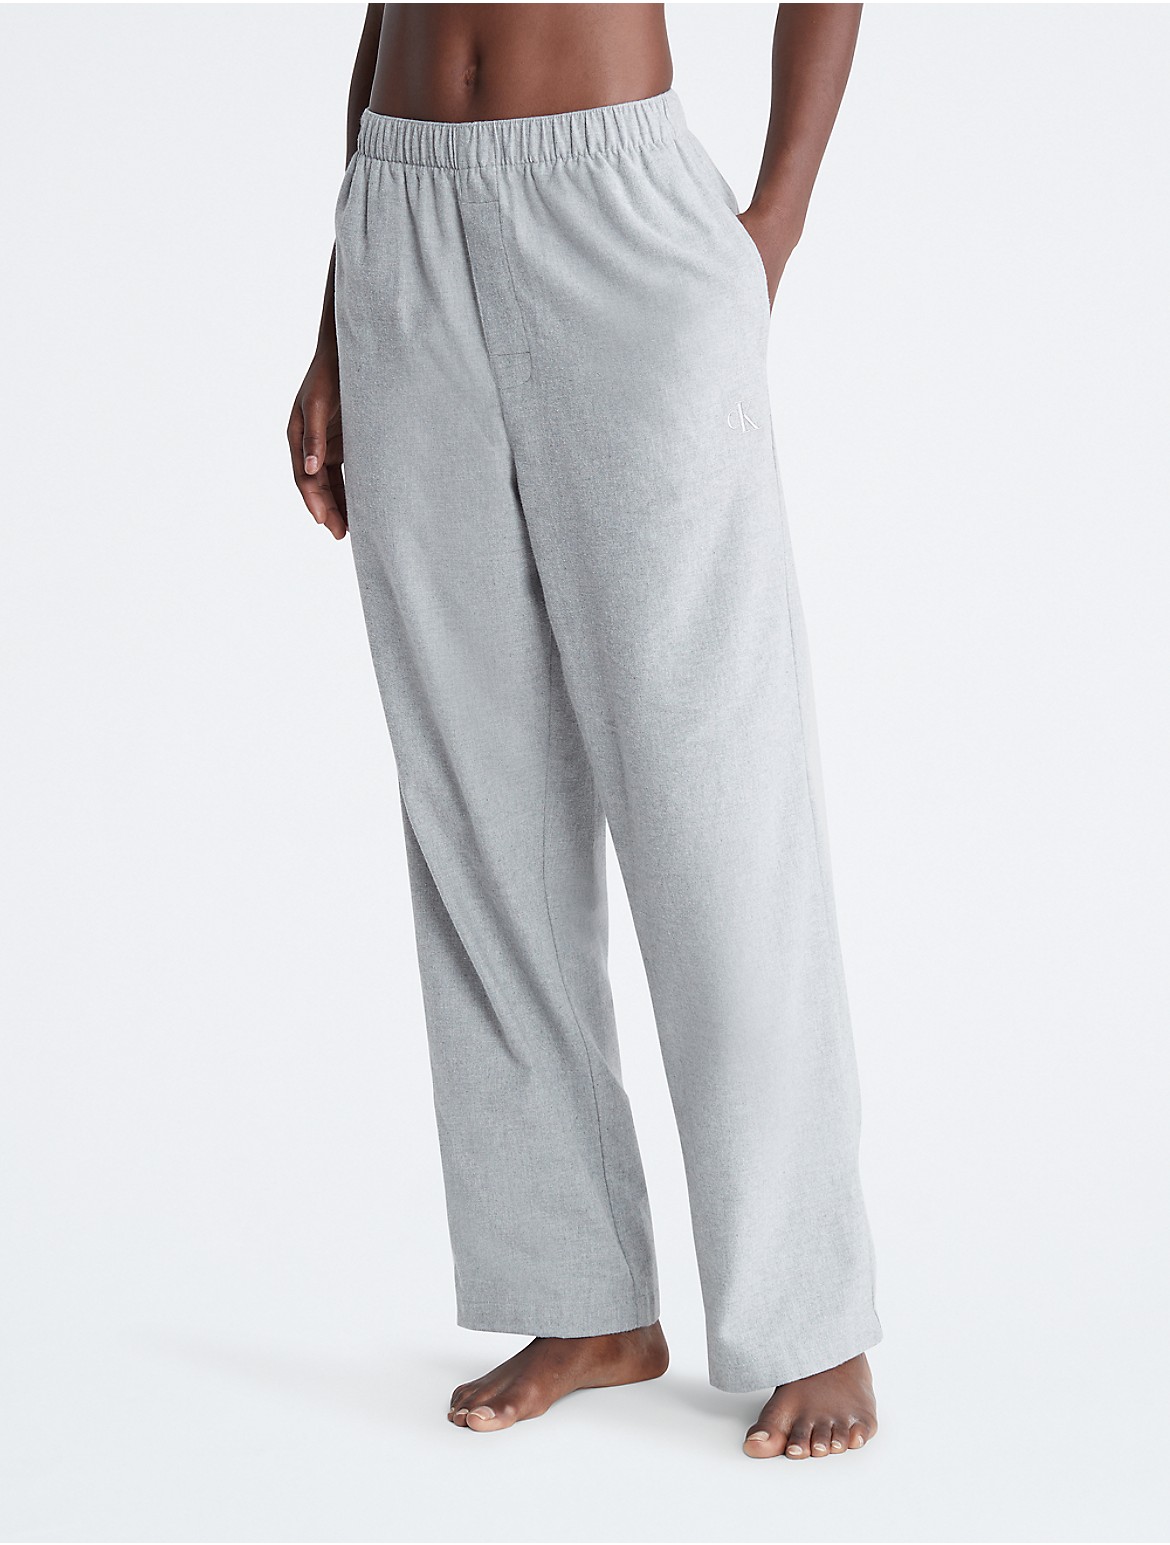 Calvin Klein Women's Pure Flannel Sleep Pants - Grey - S